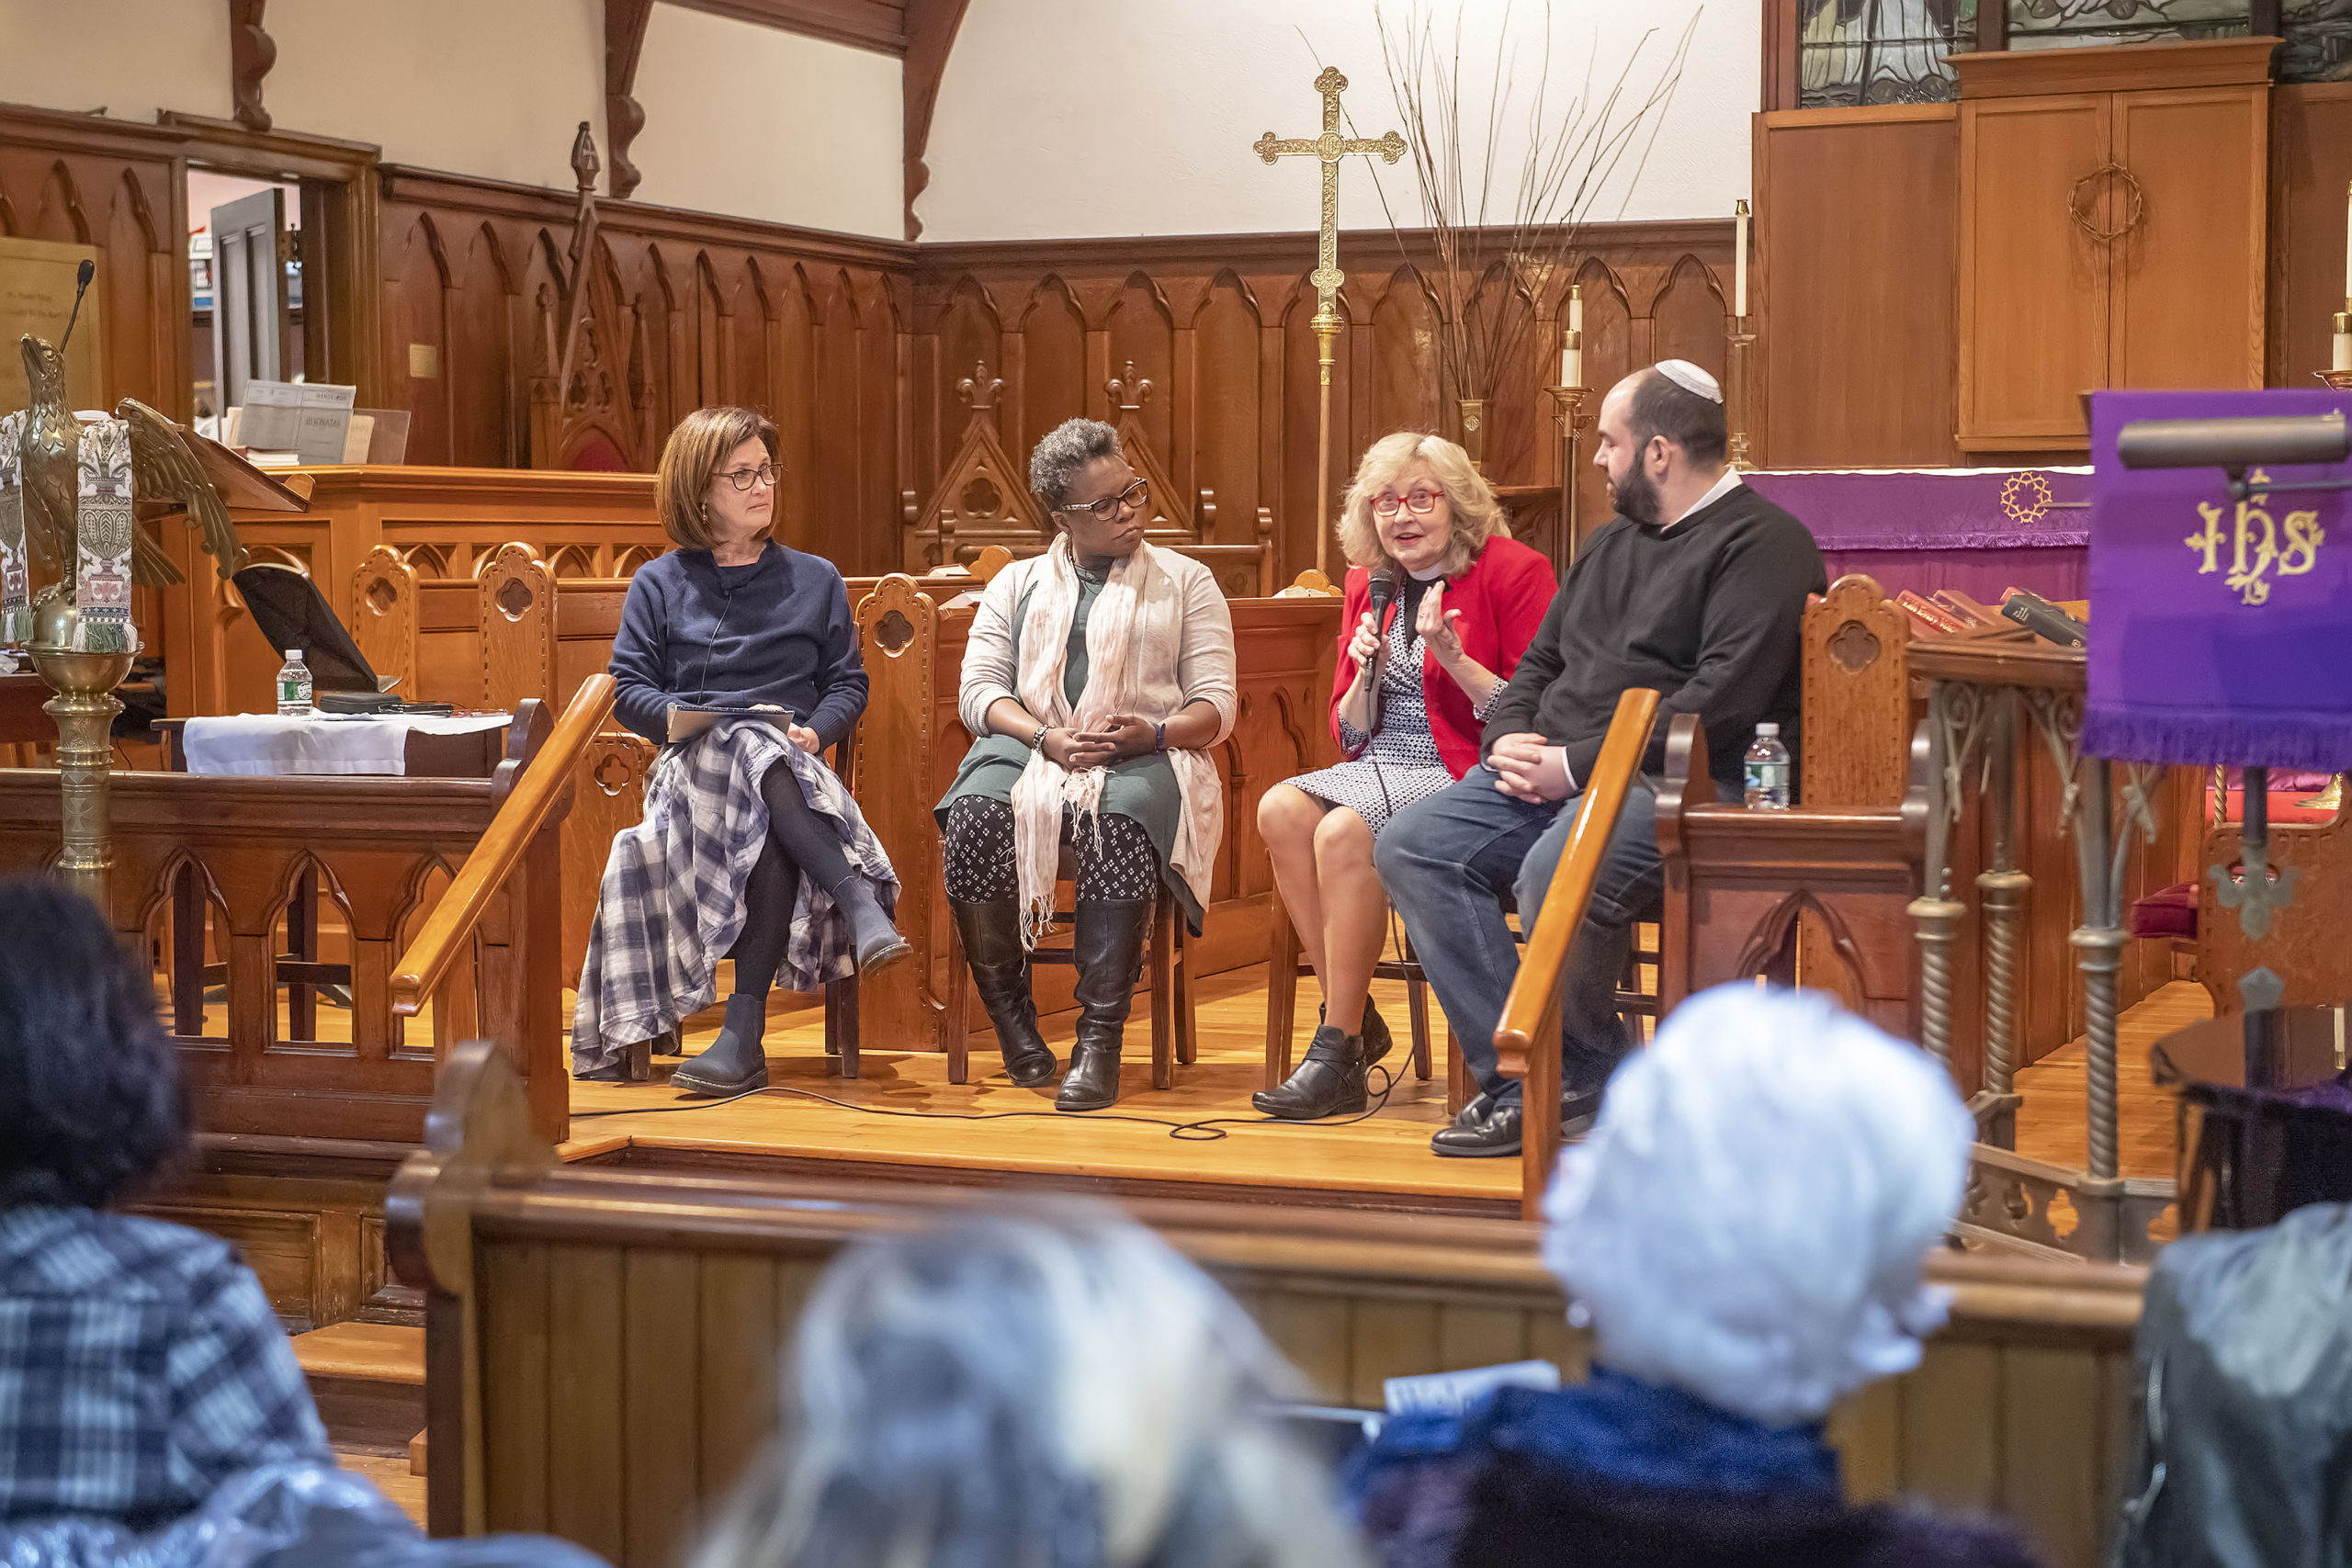 Patty McCormack, Minister Kimberly Quinn Johnson, Rev. Karen Ann Campbell and Rabbi Dan Geffen discuss the border crisis at the Christ Episcopal Church in Sag Harbor. 